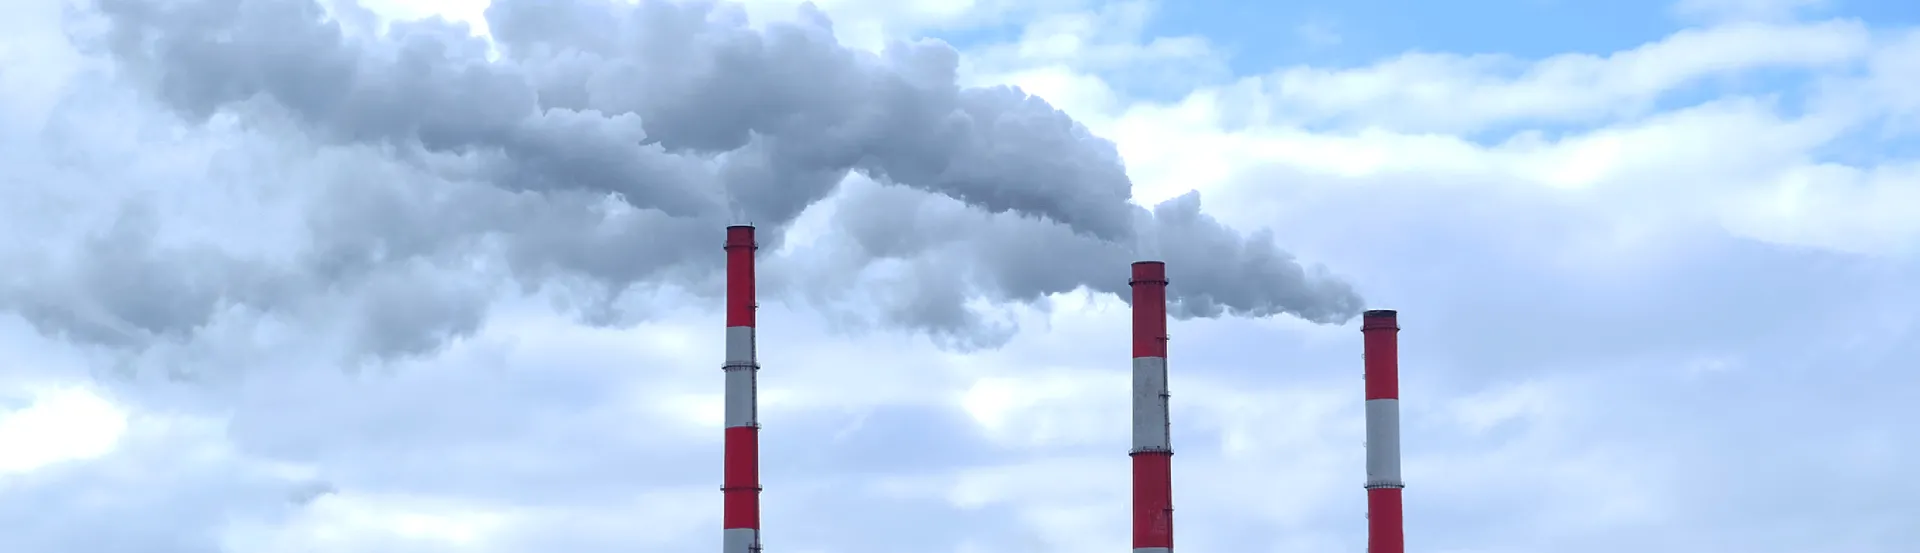 Three industrial smoke stacks expel smoke into atmosphere